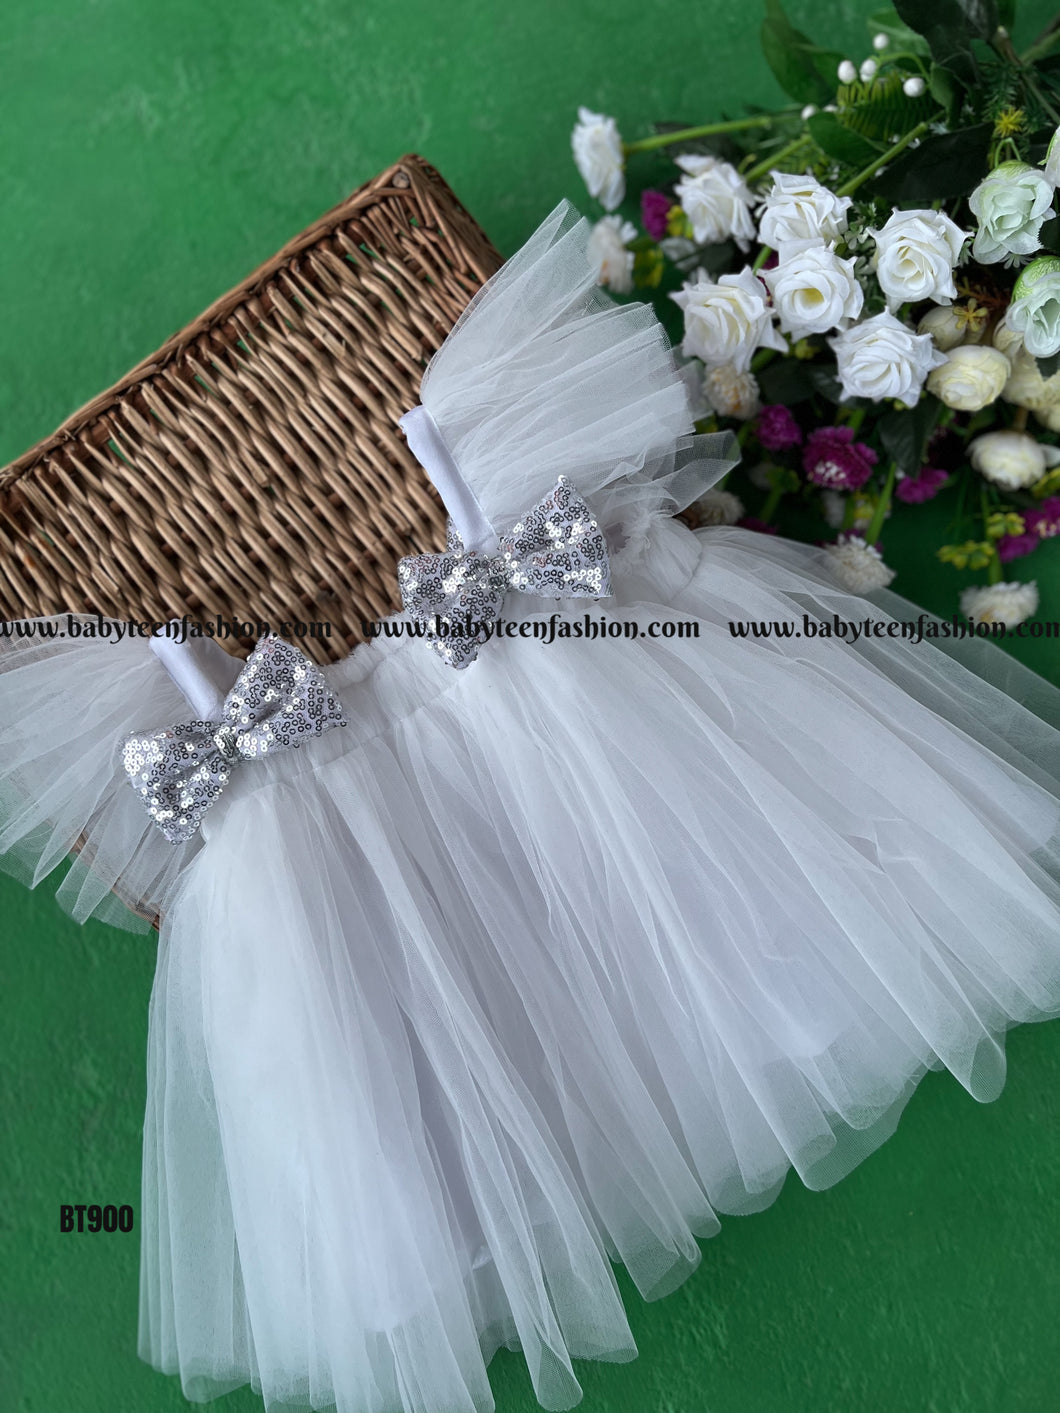 BT900 Silver Sequin Angel Wings Dress - Elevate Her Celebration